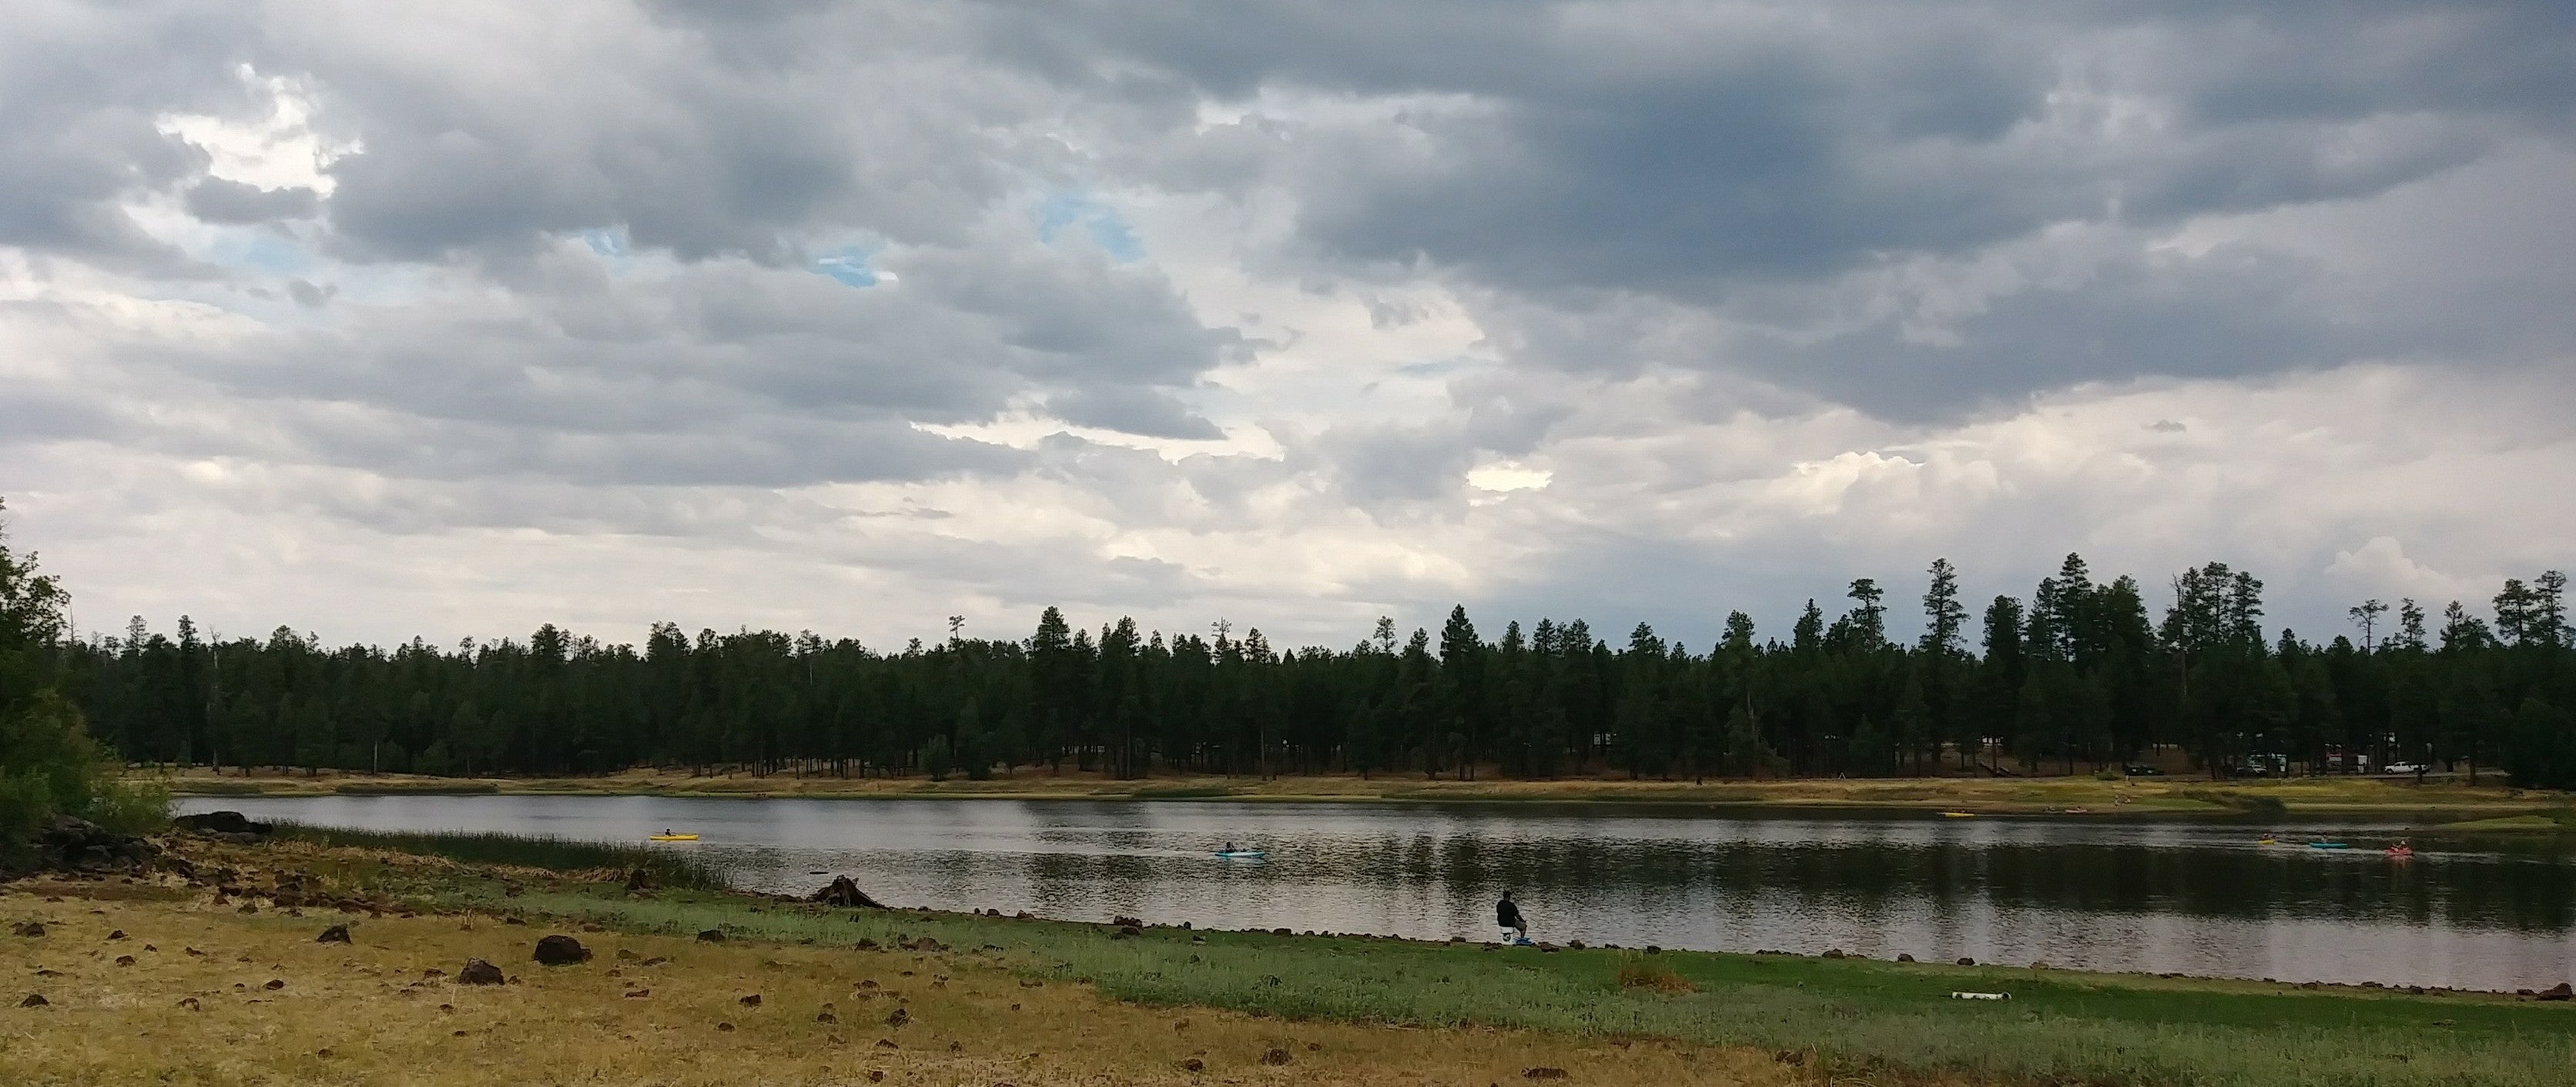 Nearby small lake, before Monsoon rain.